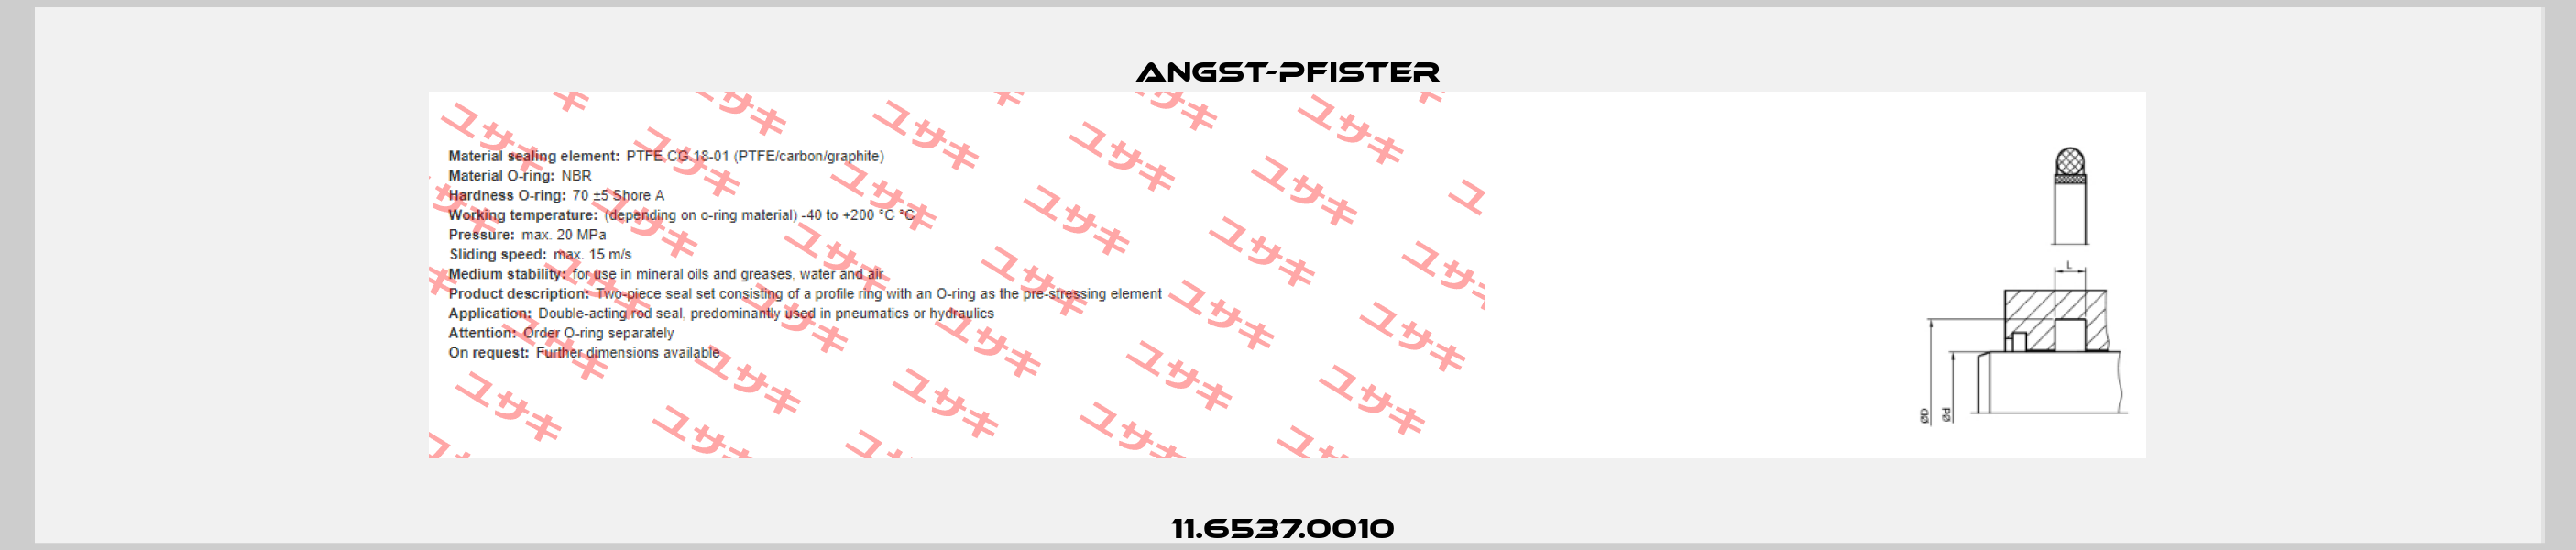 11.6537.0010  Angst-Pfister